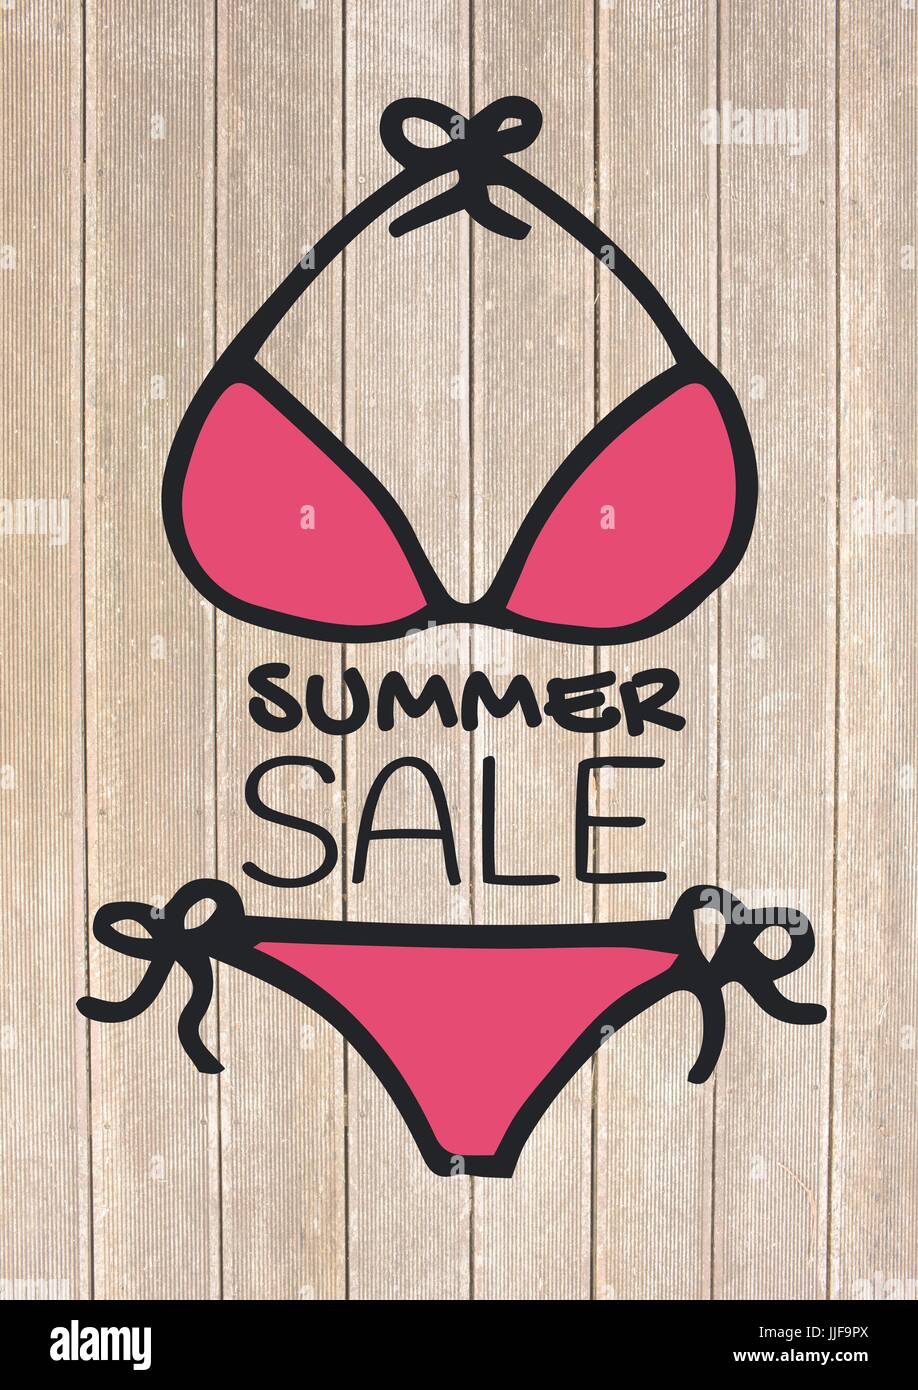 achterstalligheid Beschaven zin Digital composite of Summer sale text and pink bikini against decking Stock  Photo - Alamy